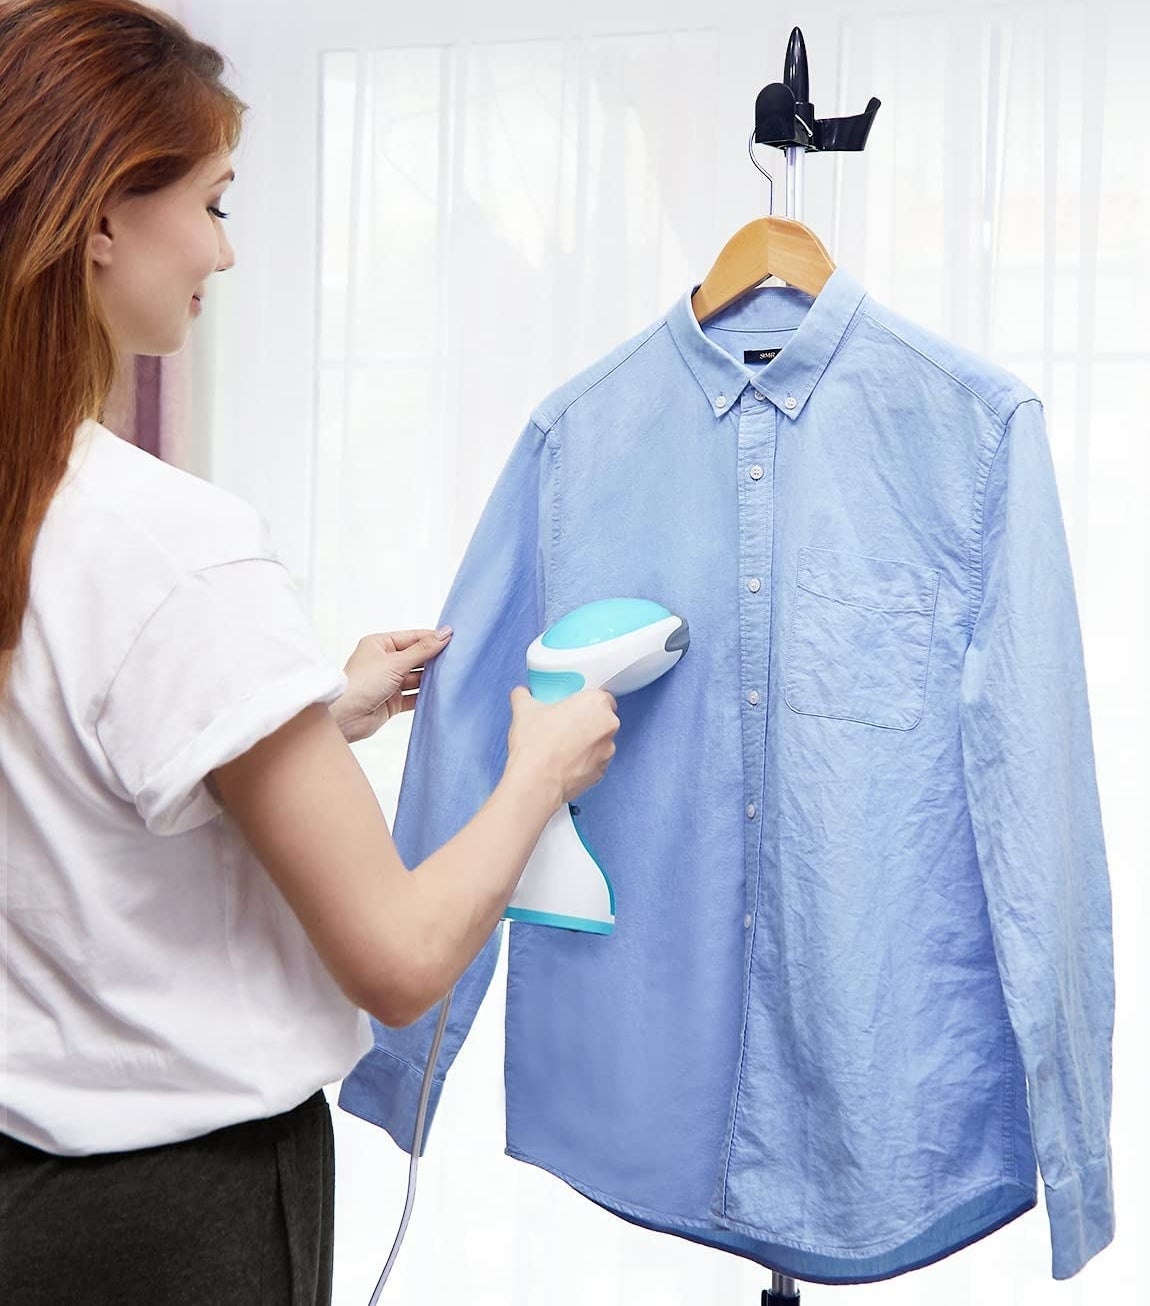 a person using the steamer to steam a button down shirt